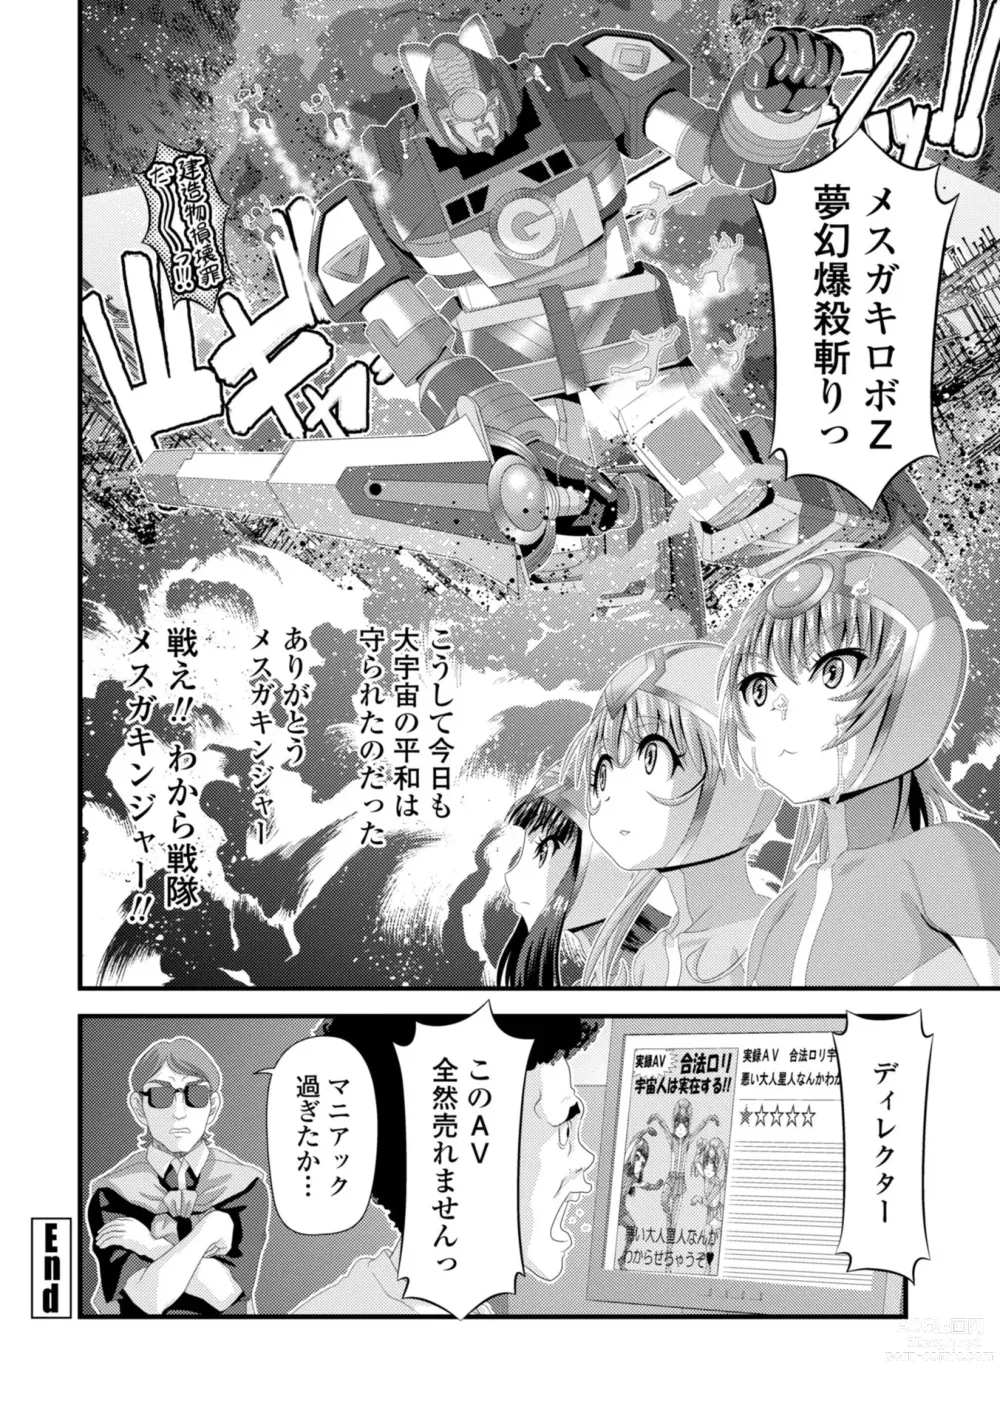 Page 18 of manga minimum material 1